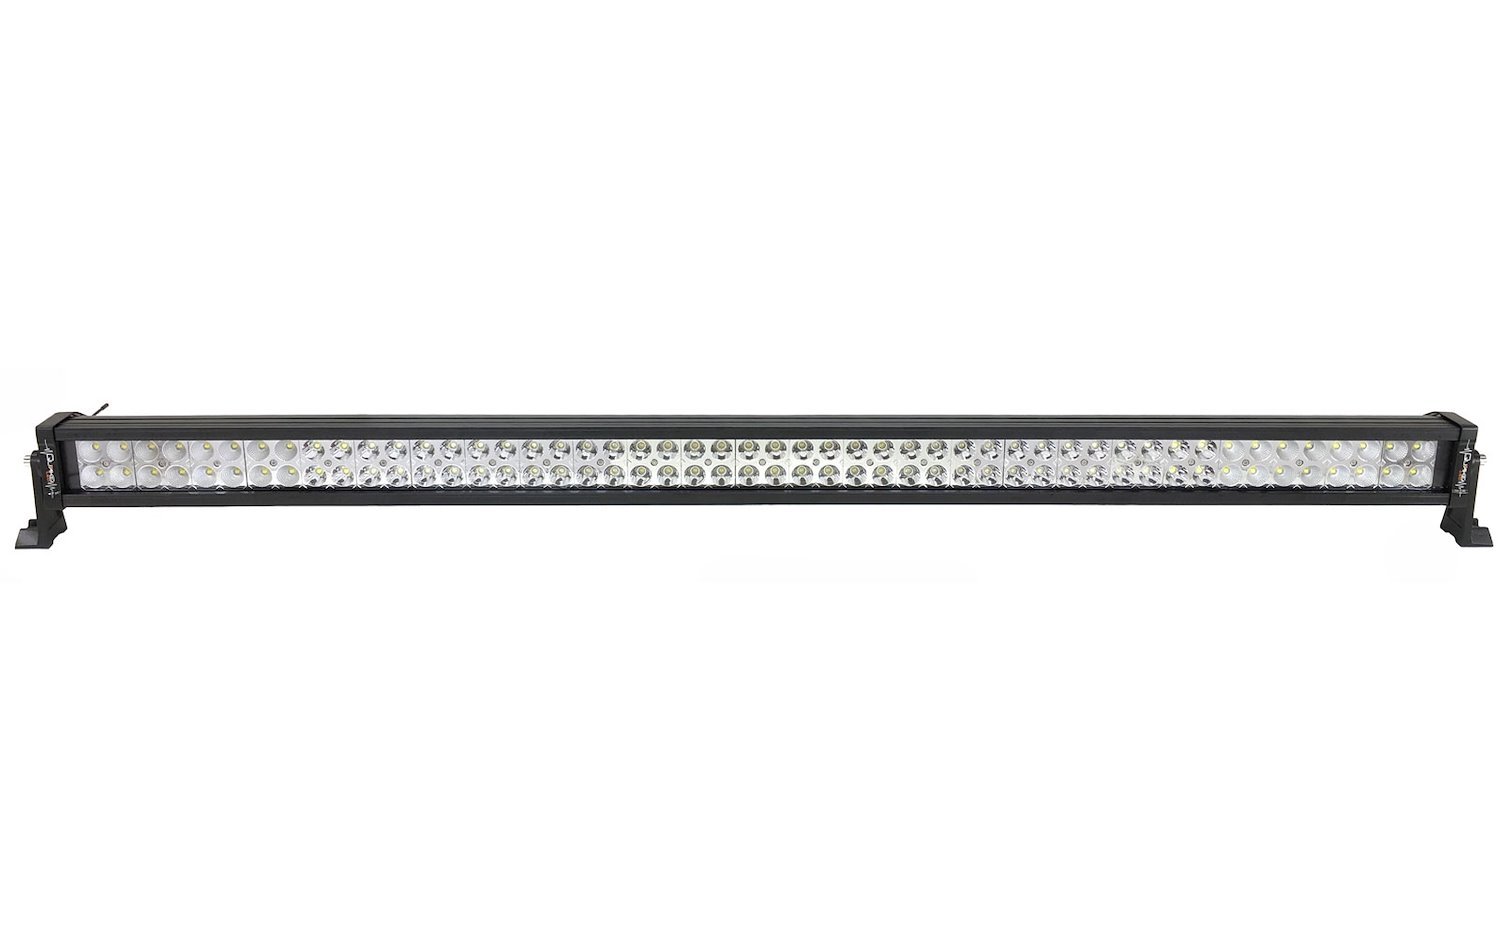 QUSN478 53 in. LED Light Bar, Dual Row, Super Nova Strobe